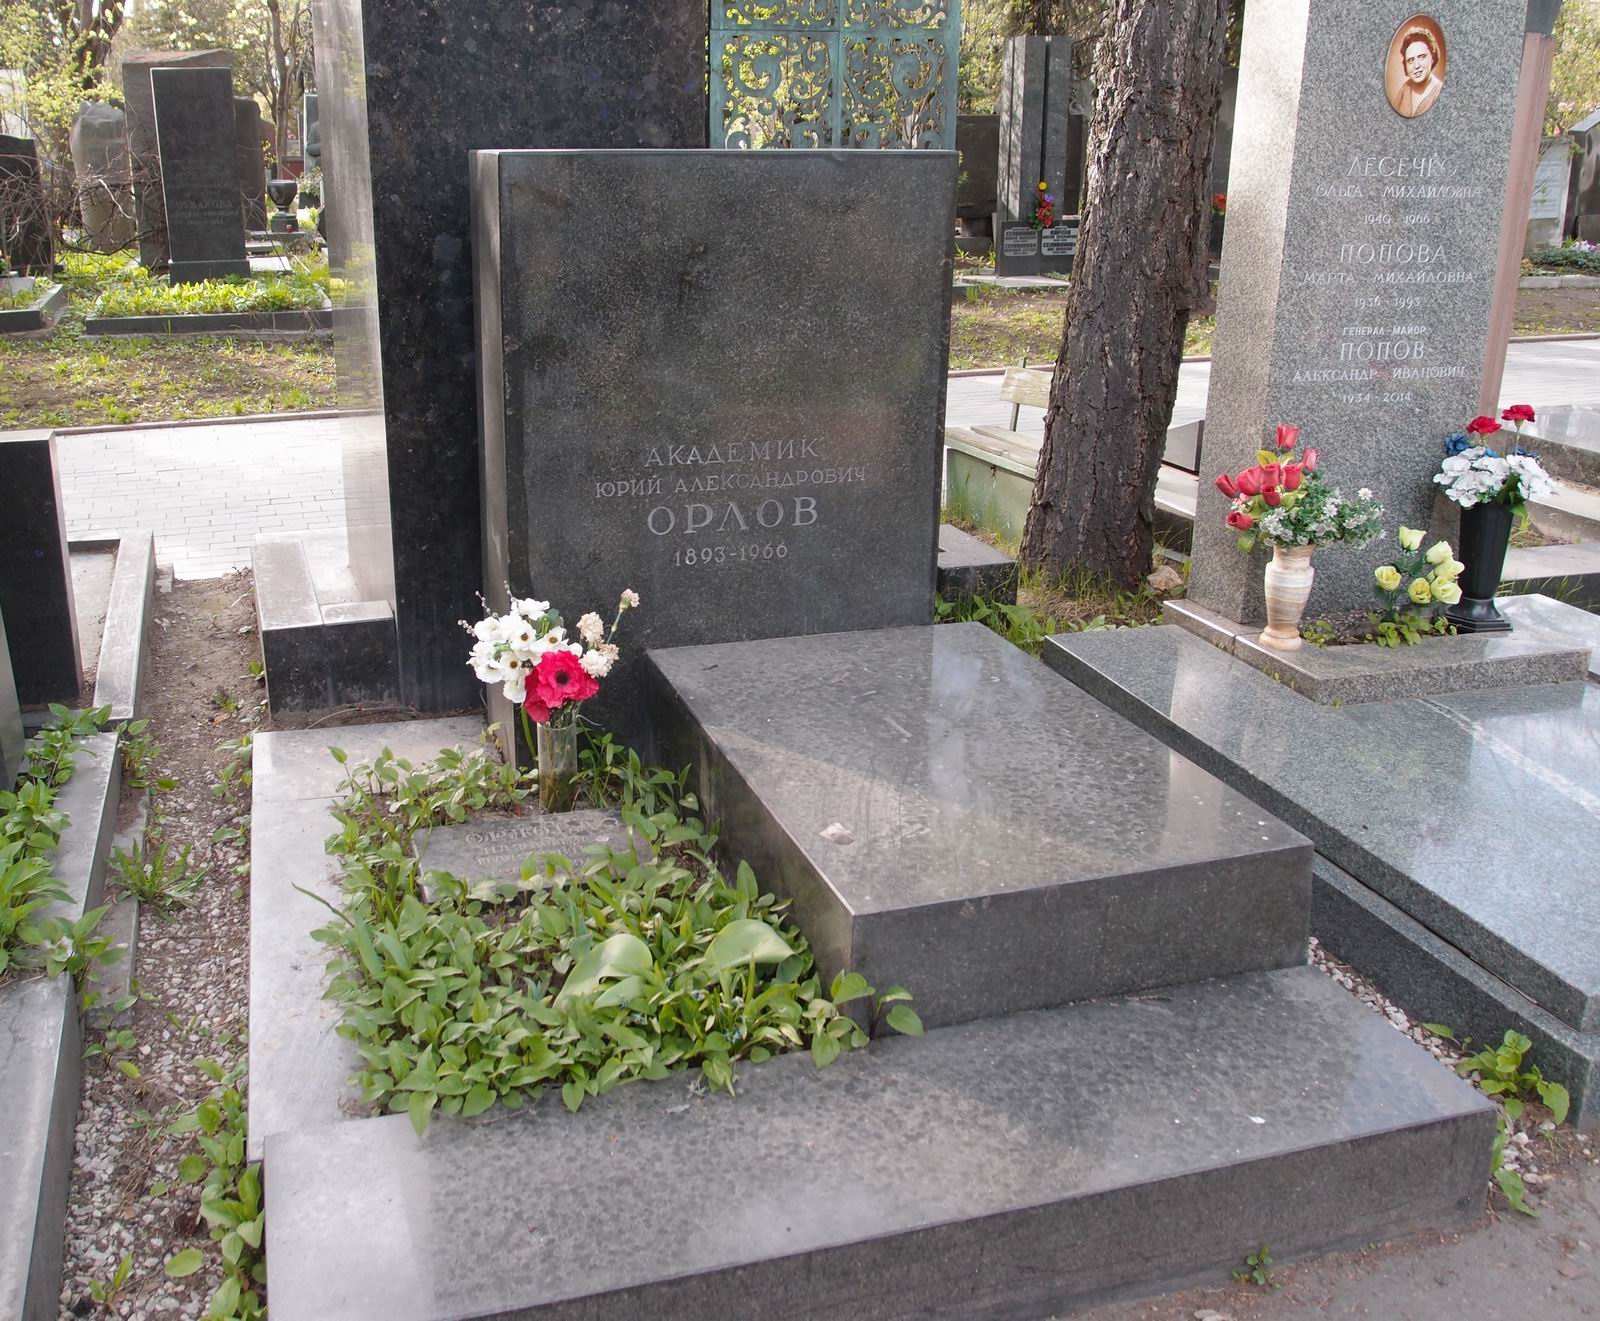 Орлова похоронена. Здесь похоронен Орлов.